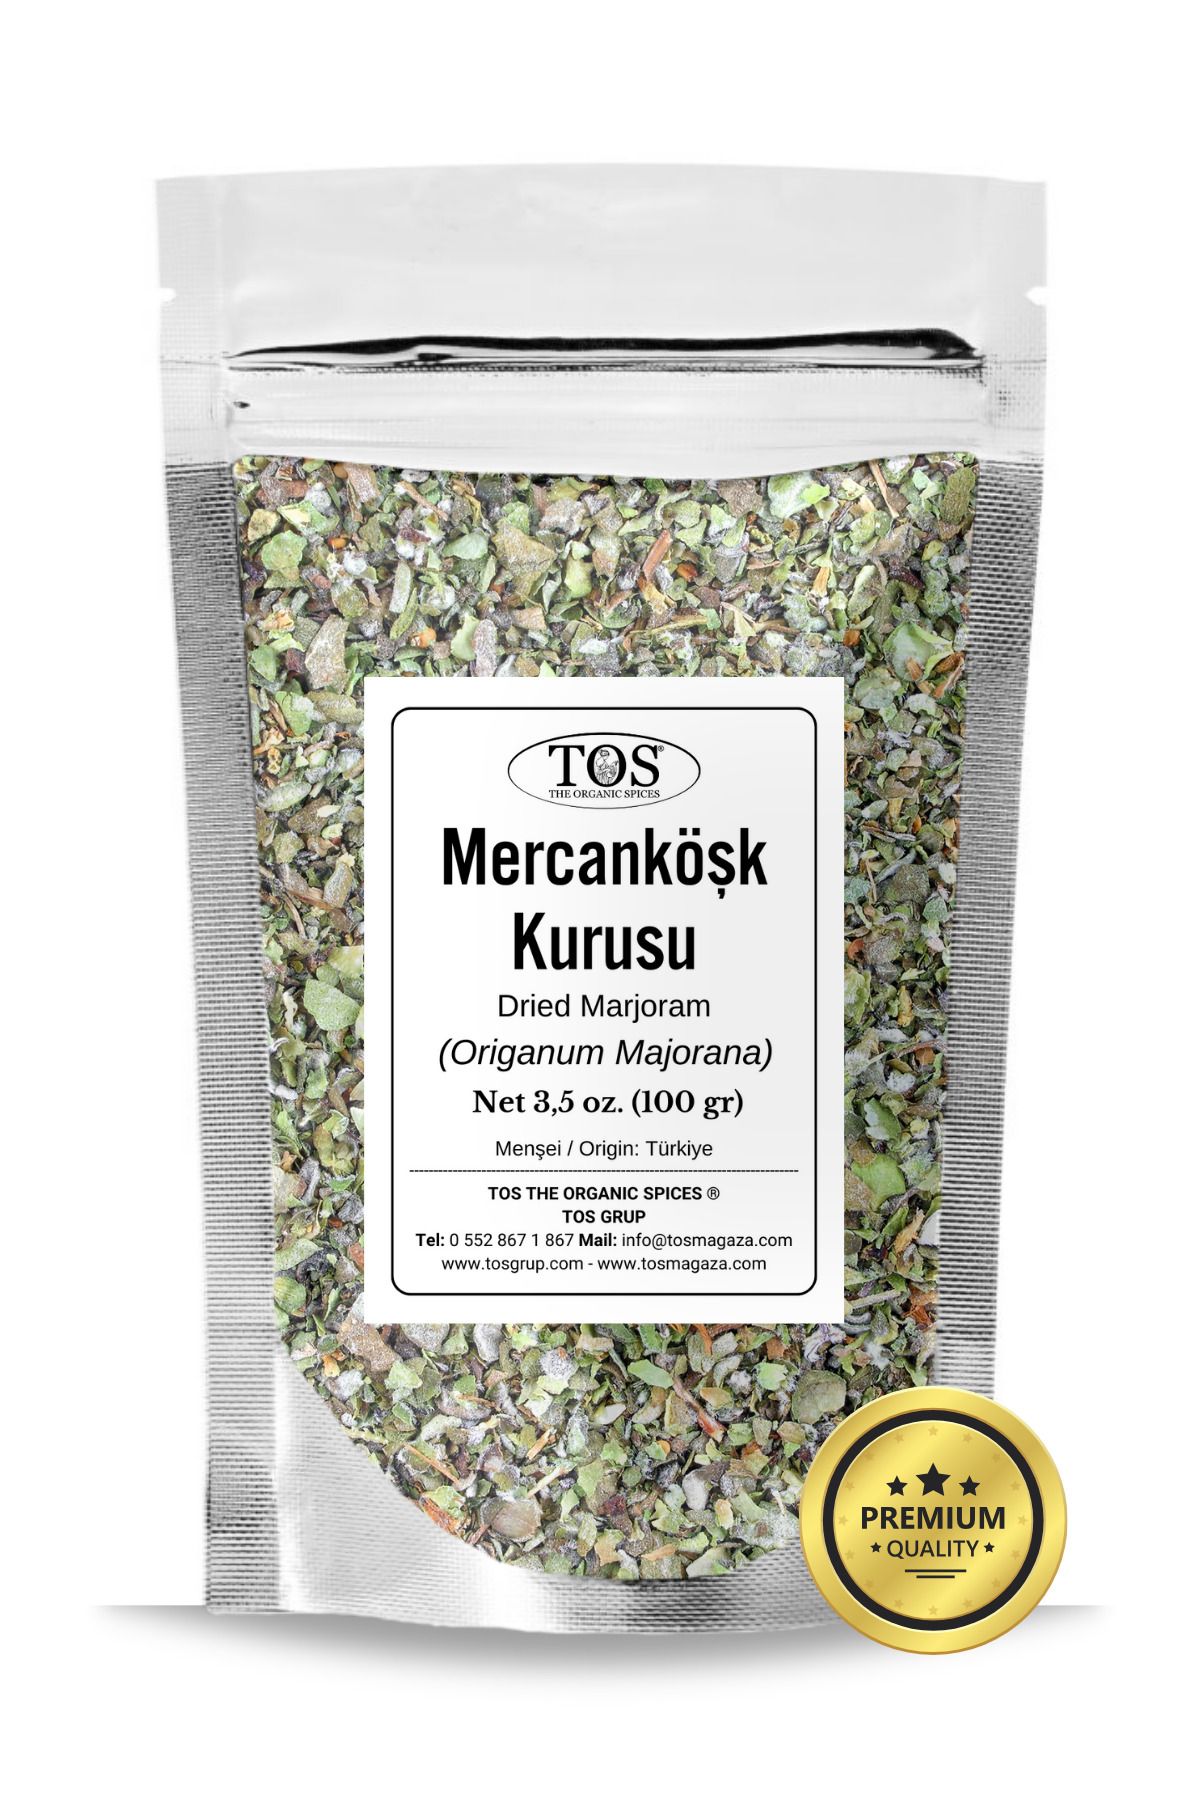 TOS The Organic Spices Mercanköşk 100 gr (1. KALİTE) Origanum Majorana